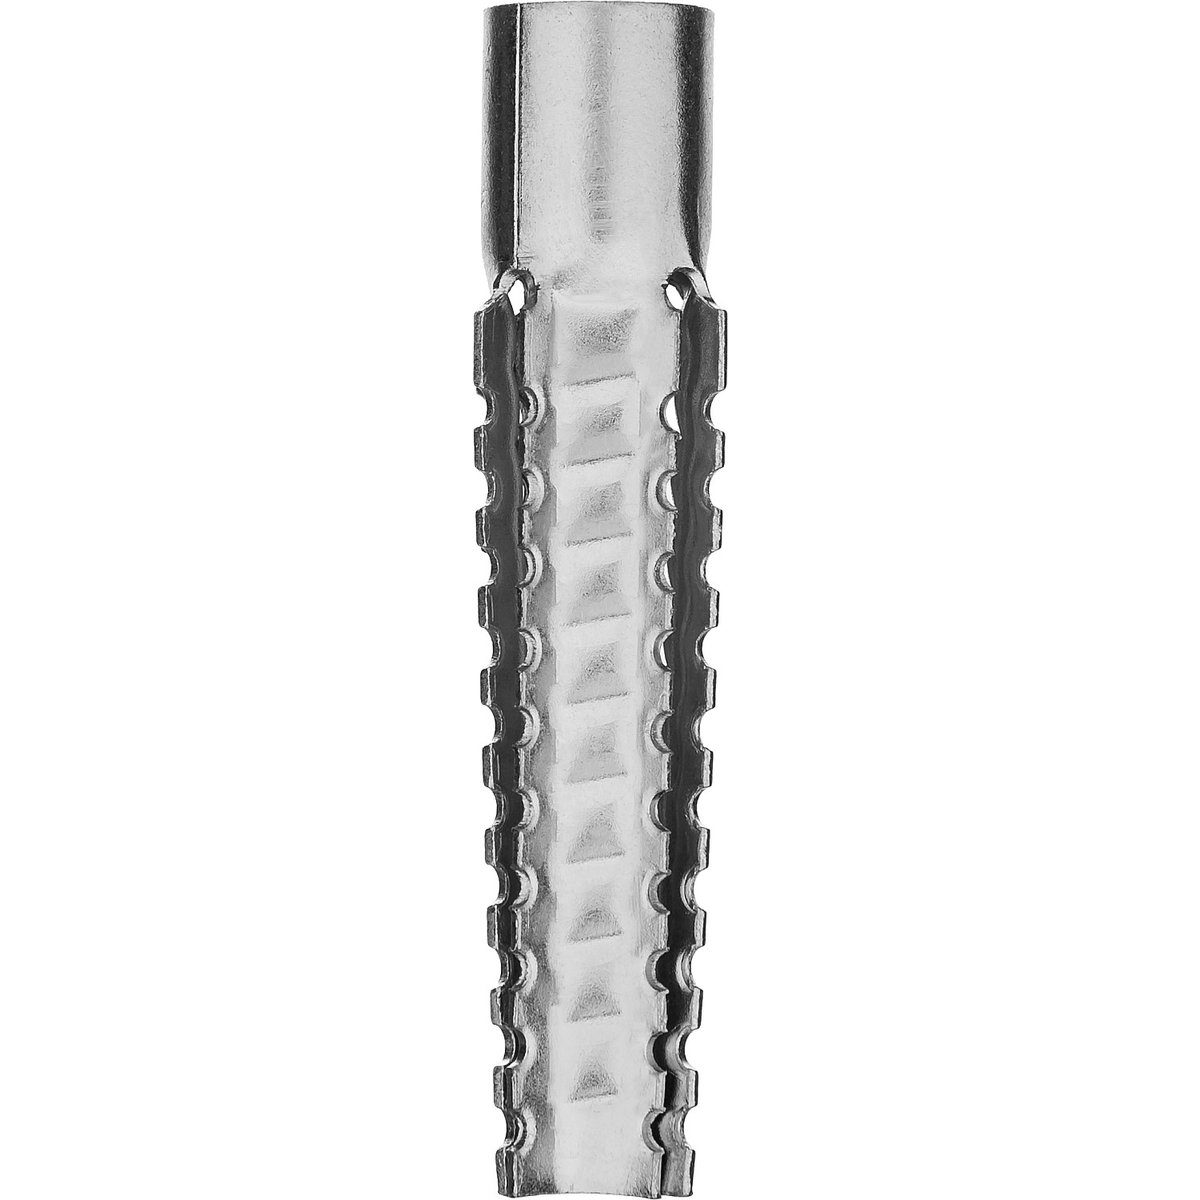 ЗУБР 6 x 32 мм, 100 шт., оцинкованный, дюбель металлический для газобетона 302912-06-032